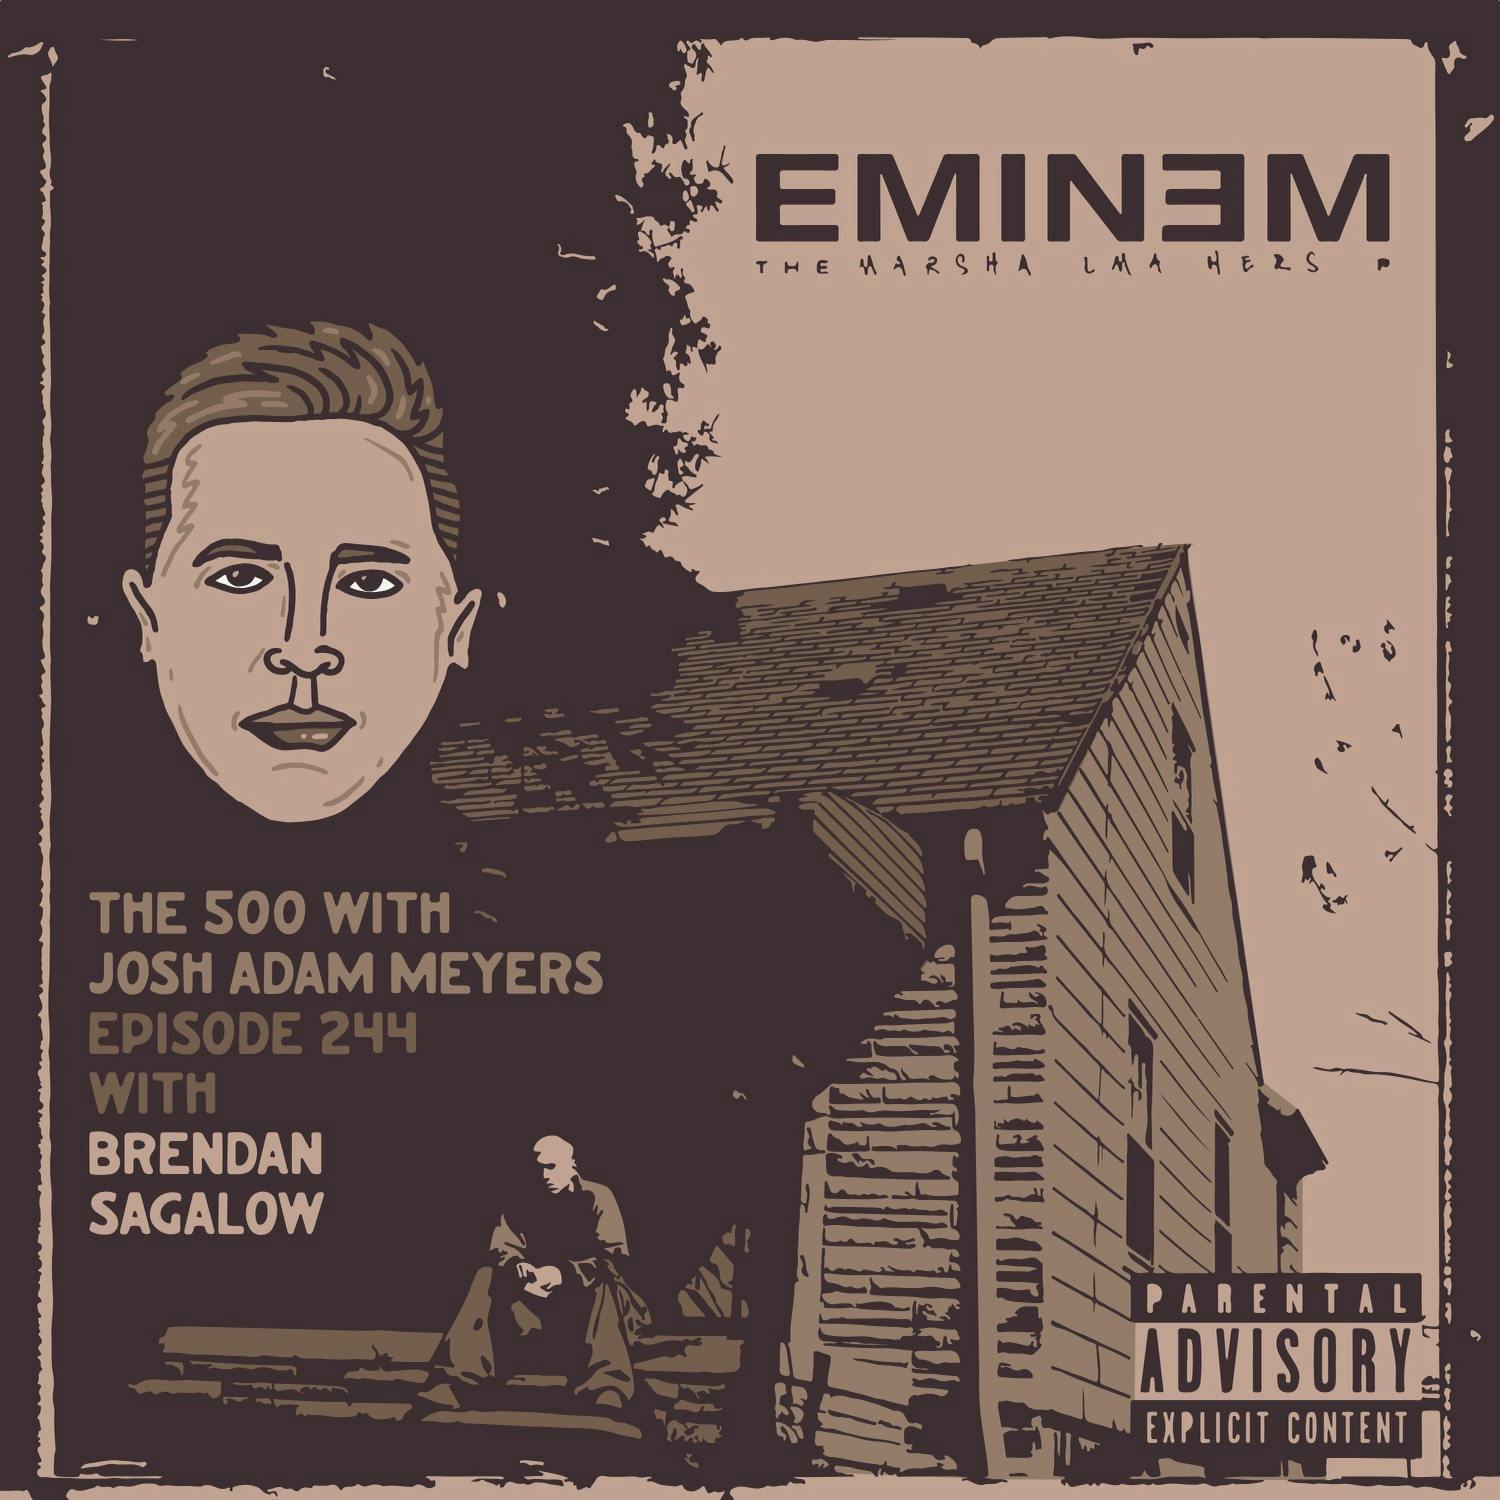 244 - Eminem - The Marshall Mathers LP - Brendan Sagalow